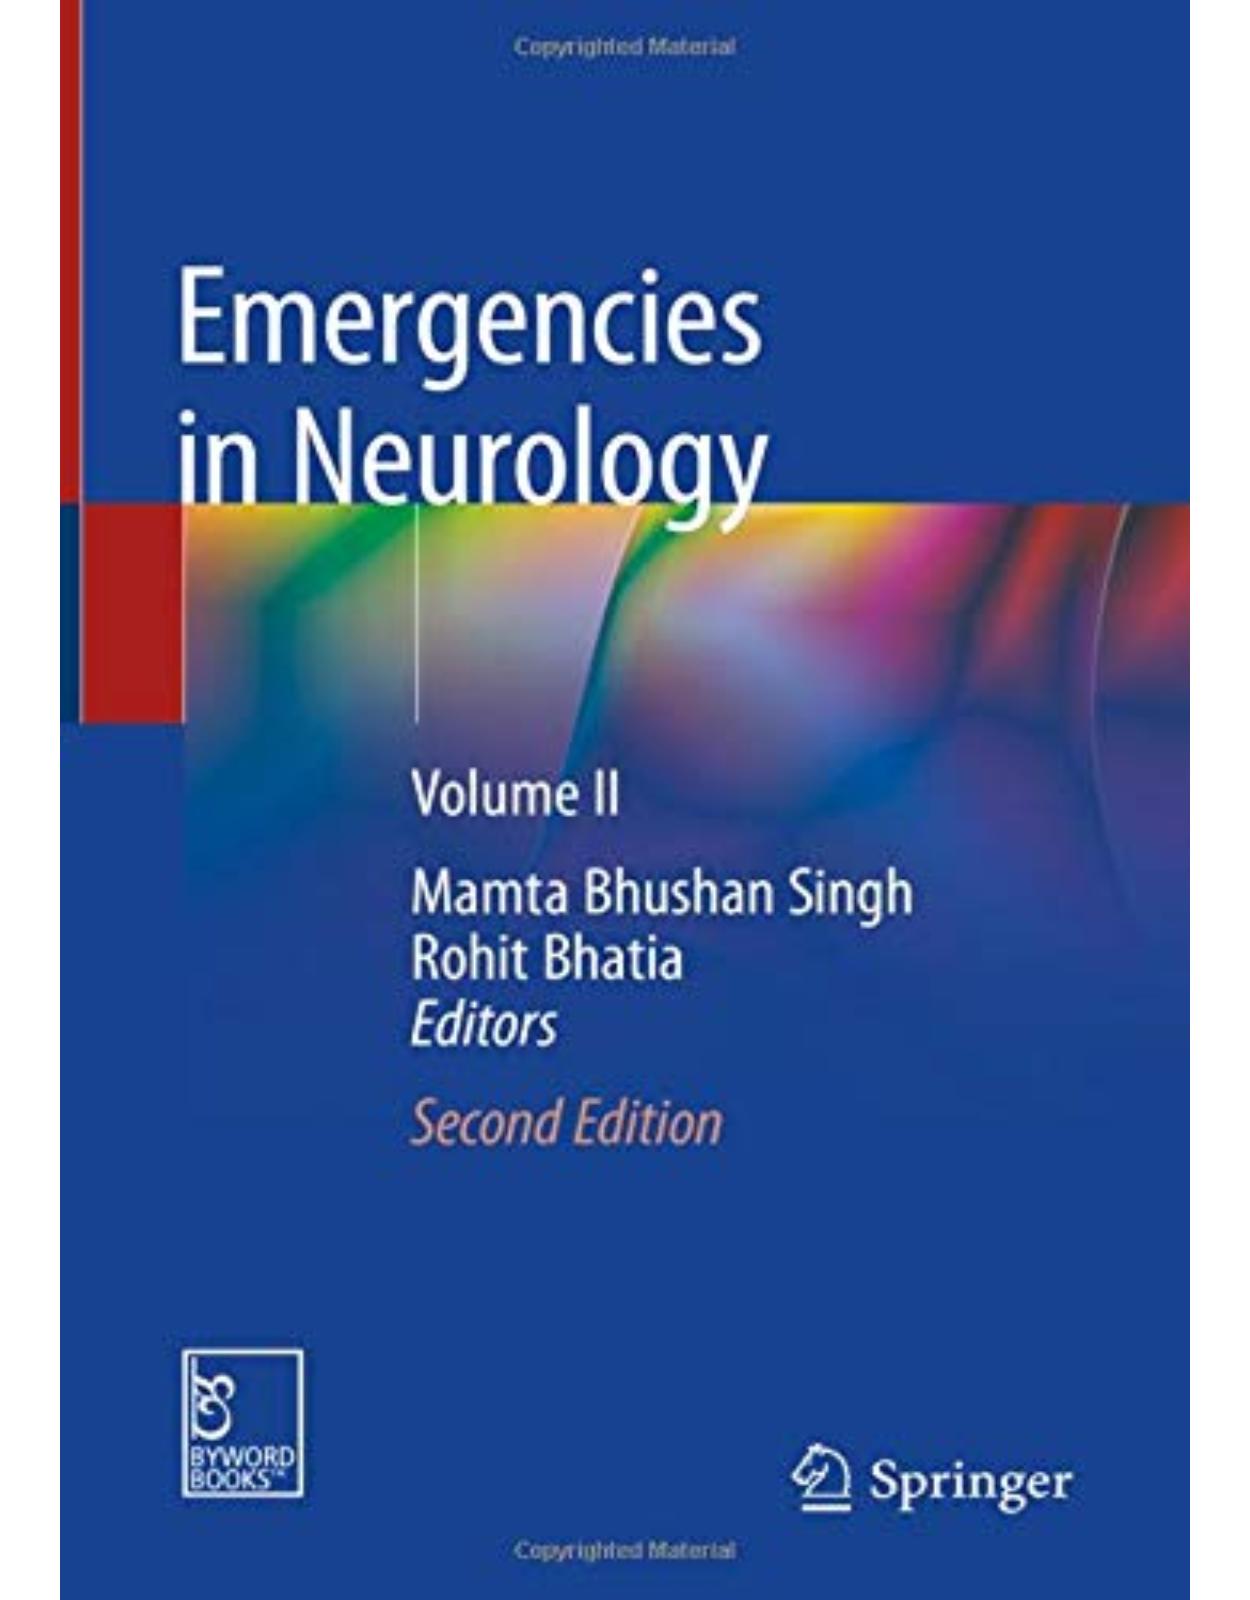 Emergencies in Neurology: Volume II